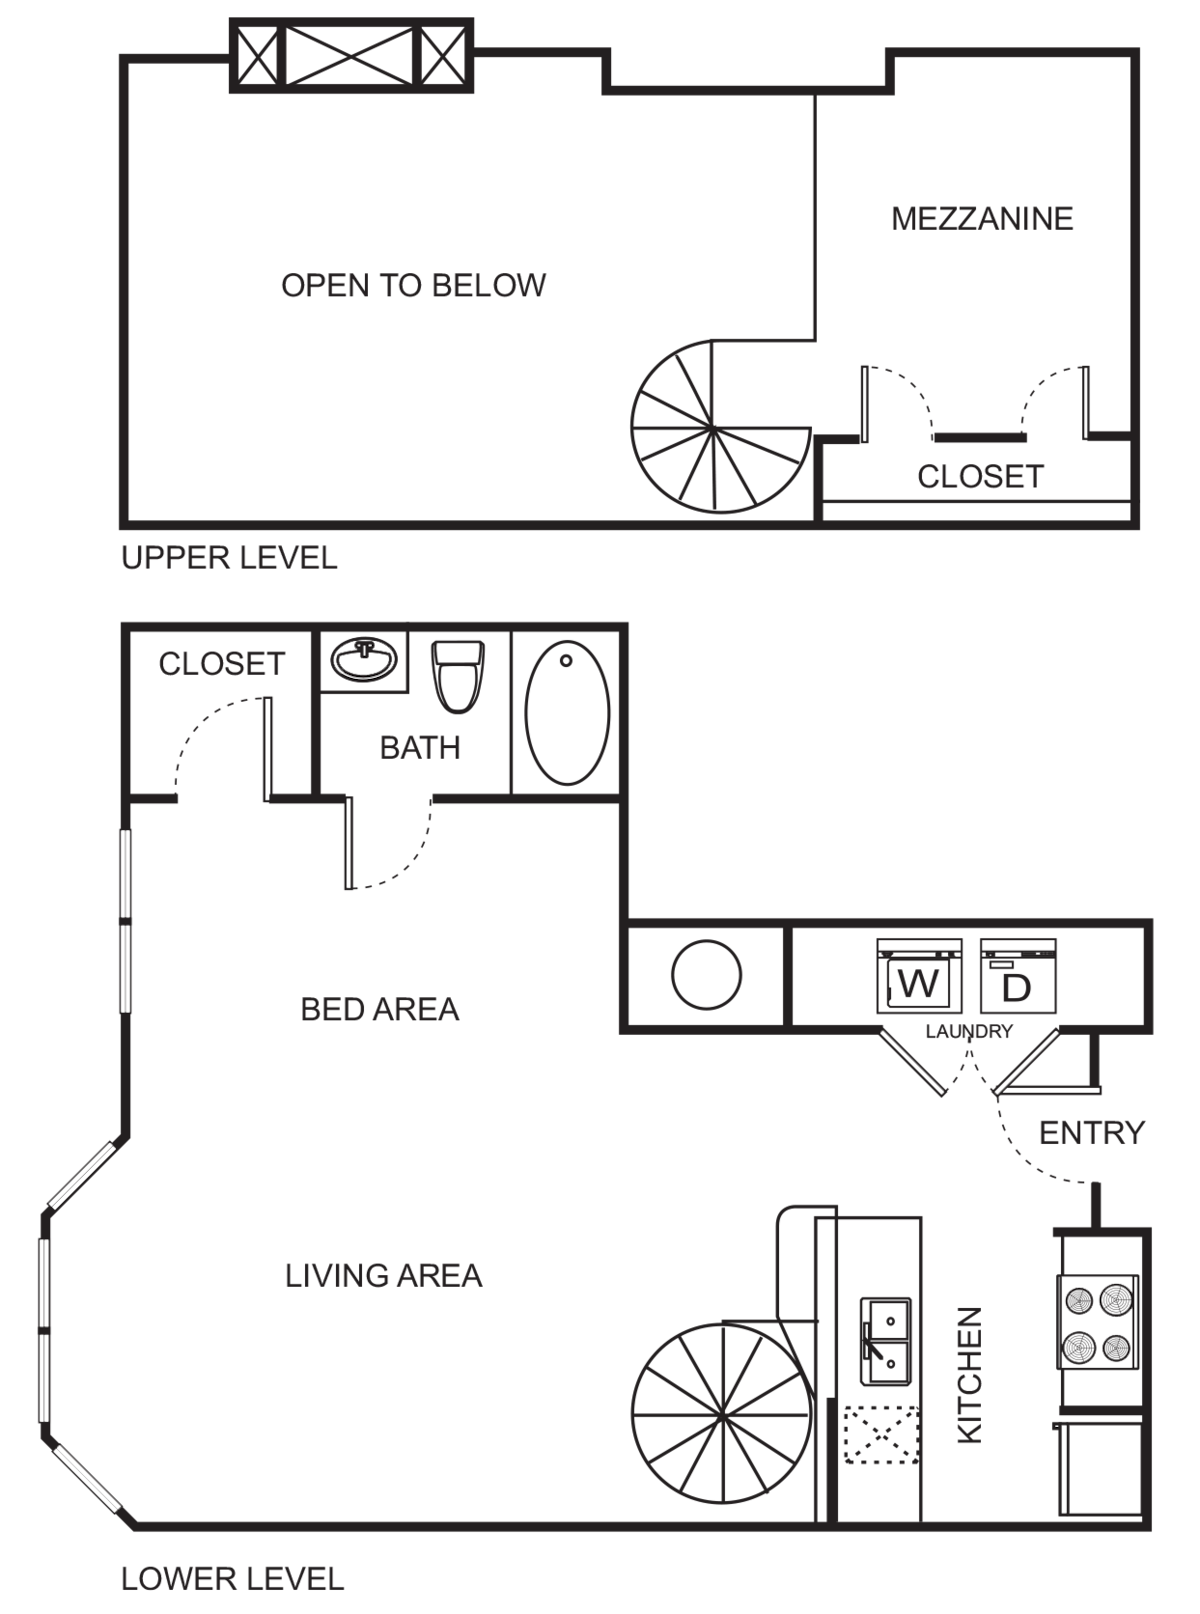 Floorplan diagram for E3-B Studio Loft, showing Studio